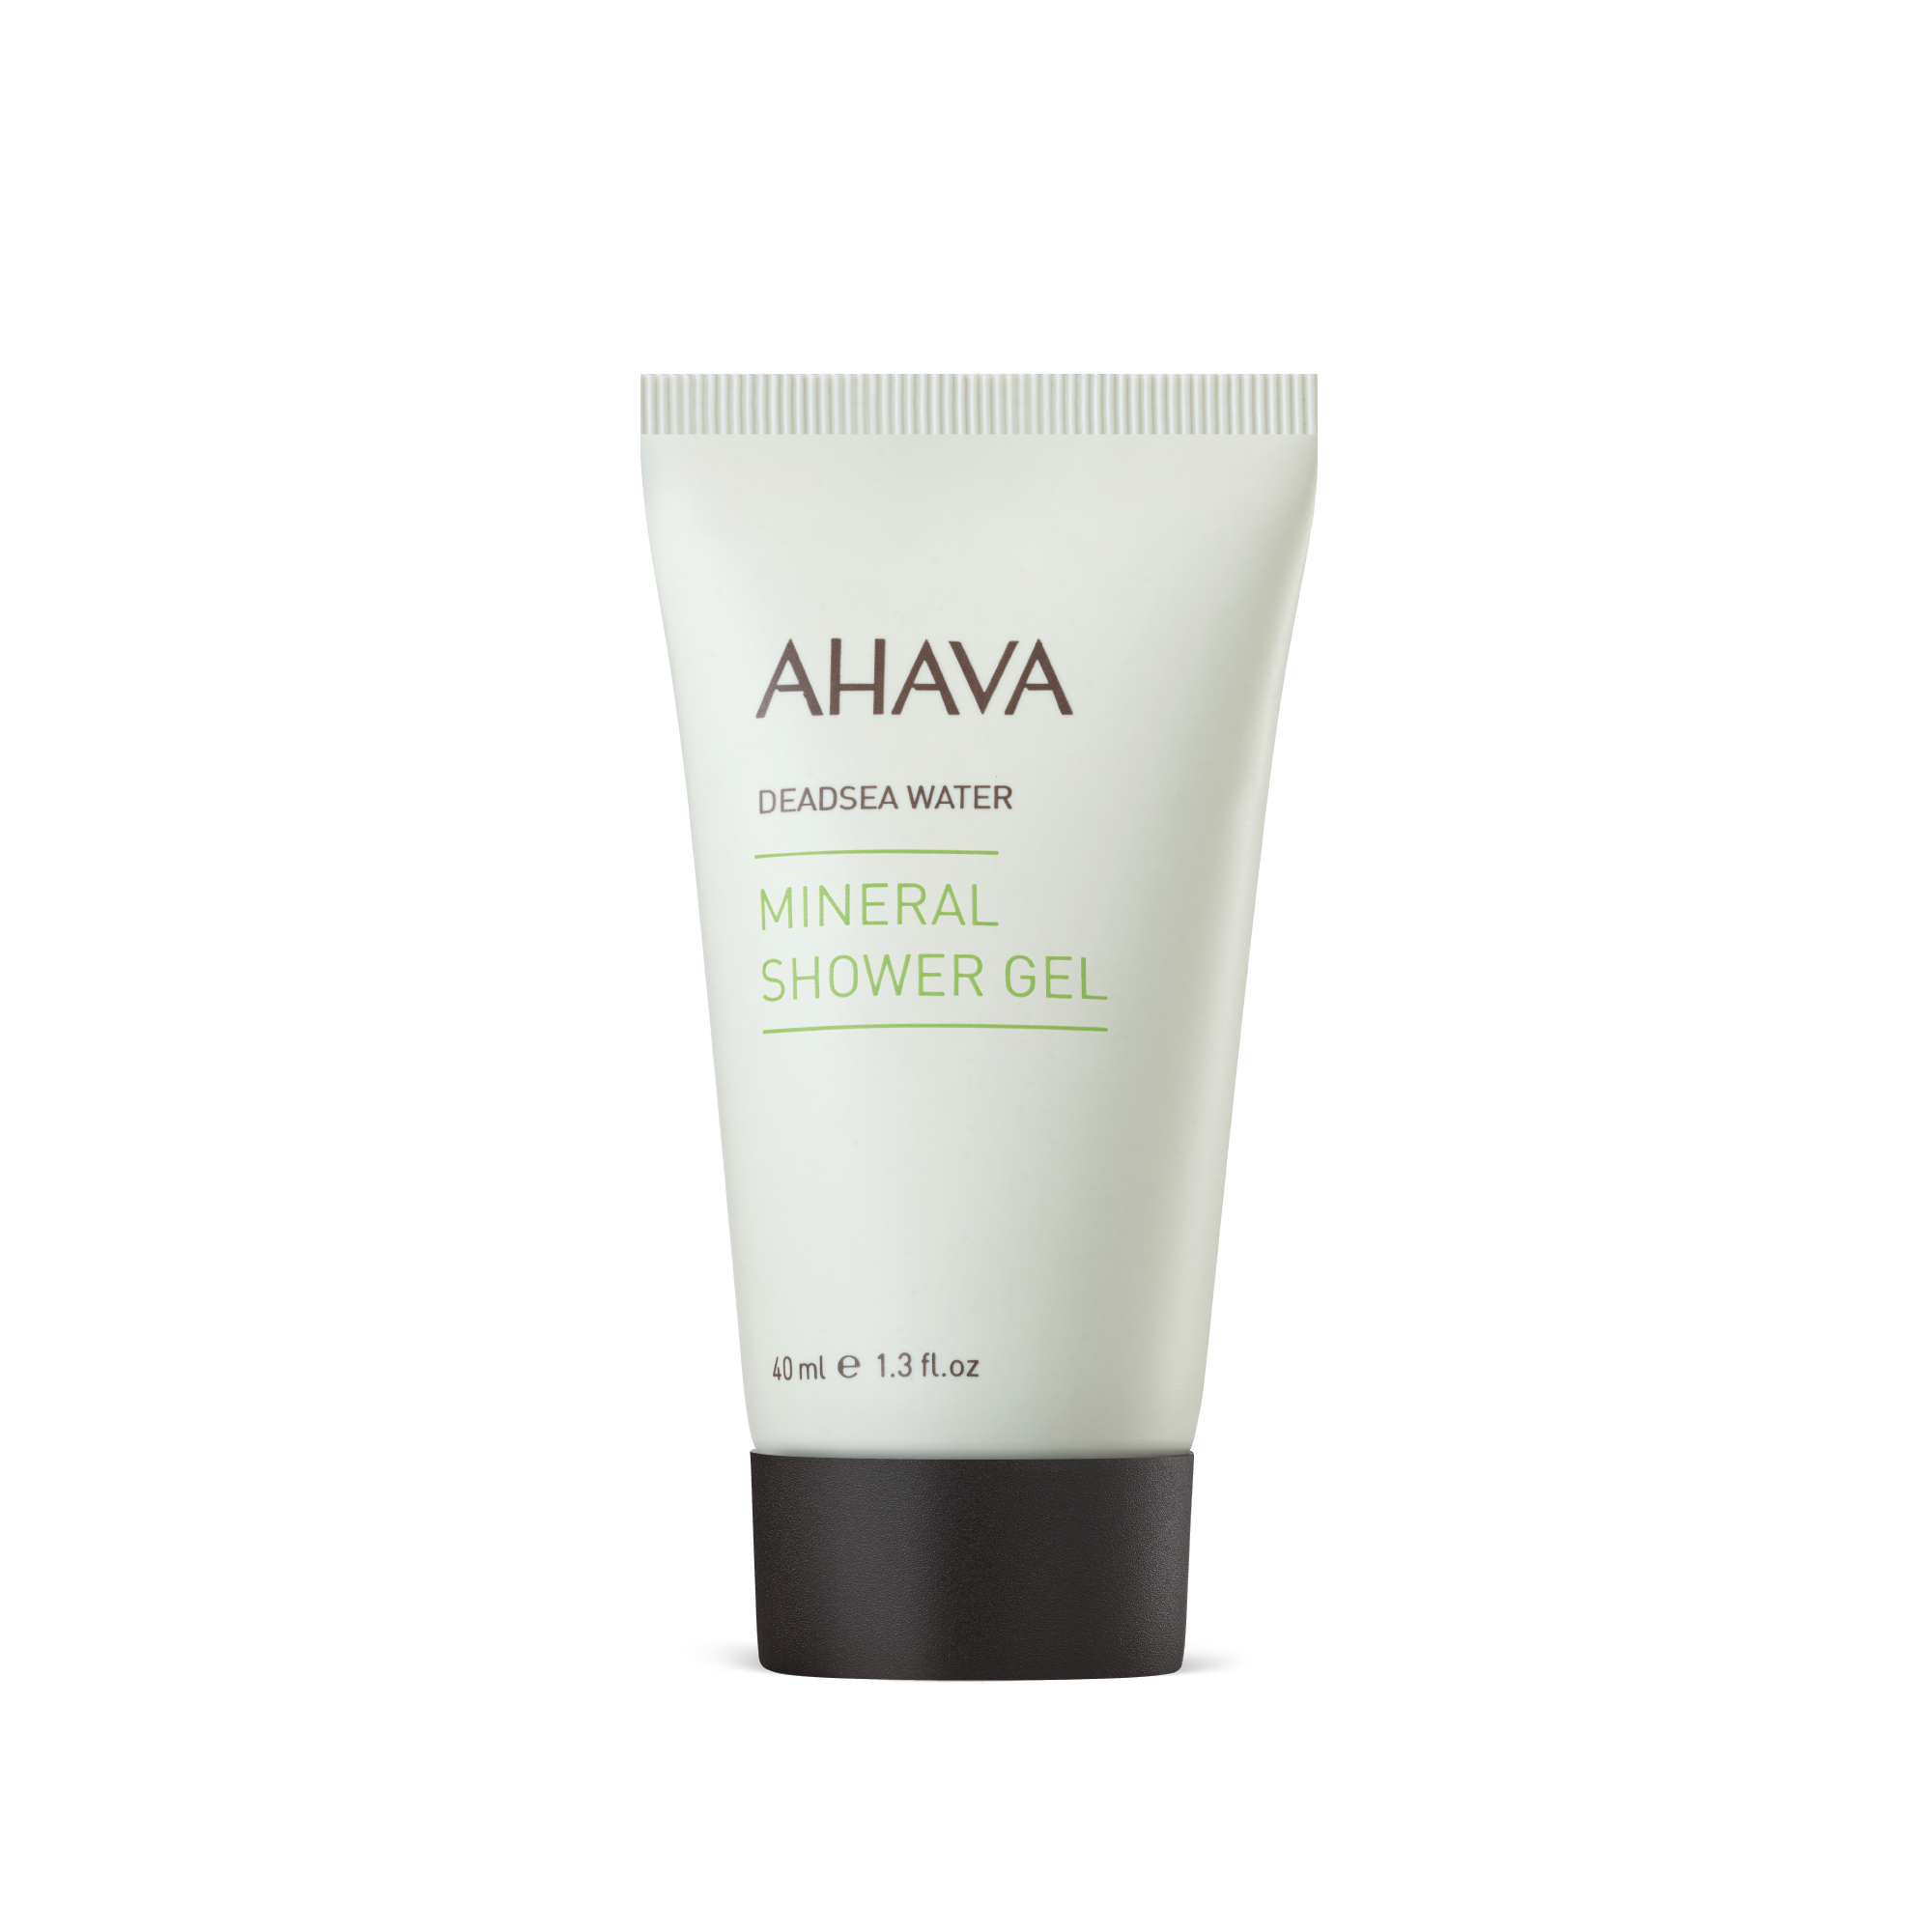 AHAVA® Dead Gel AHAVA Shower USA Sea 40ml - – Mineral